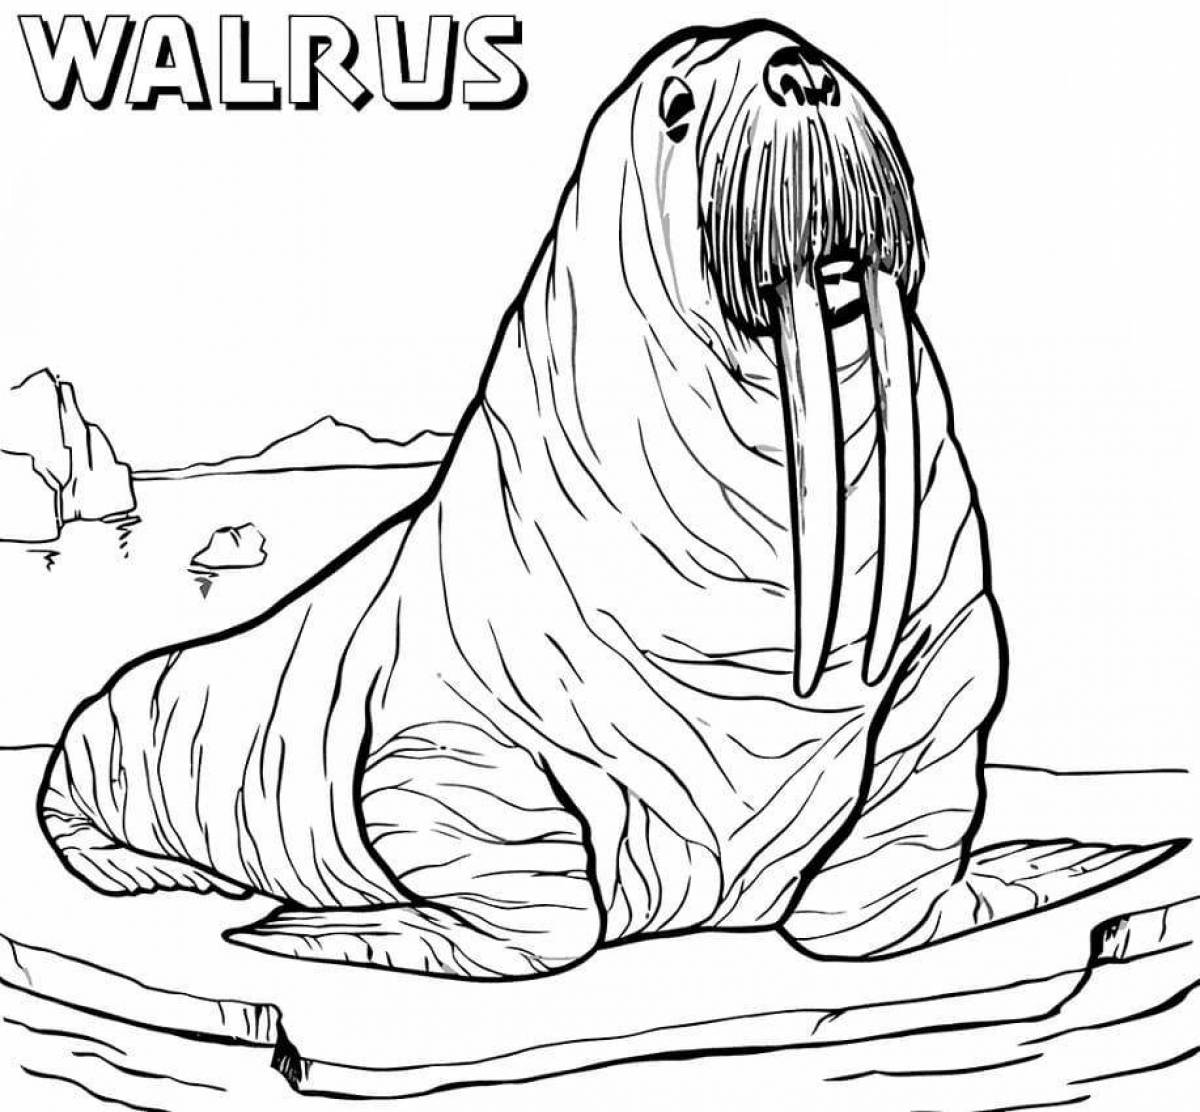 Walrus fun coloring for kids